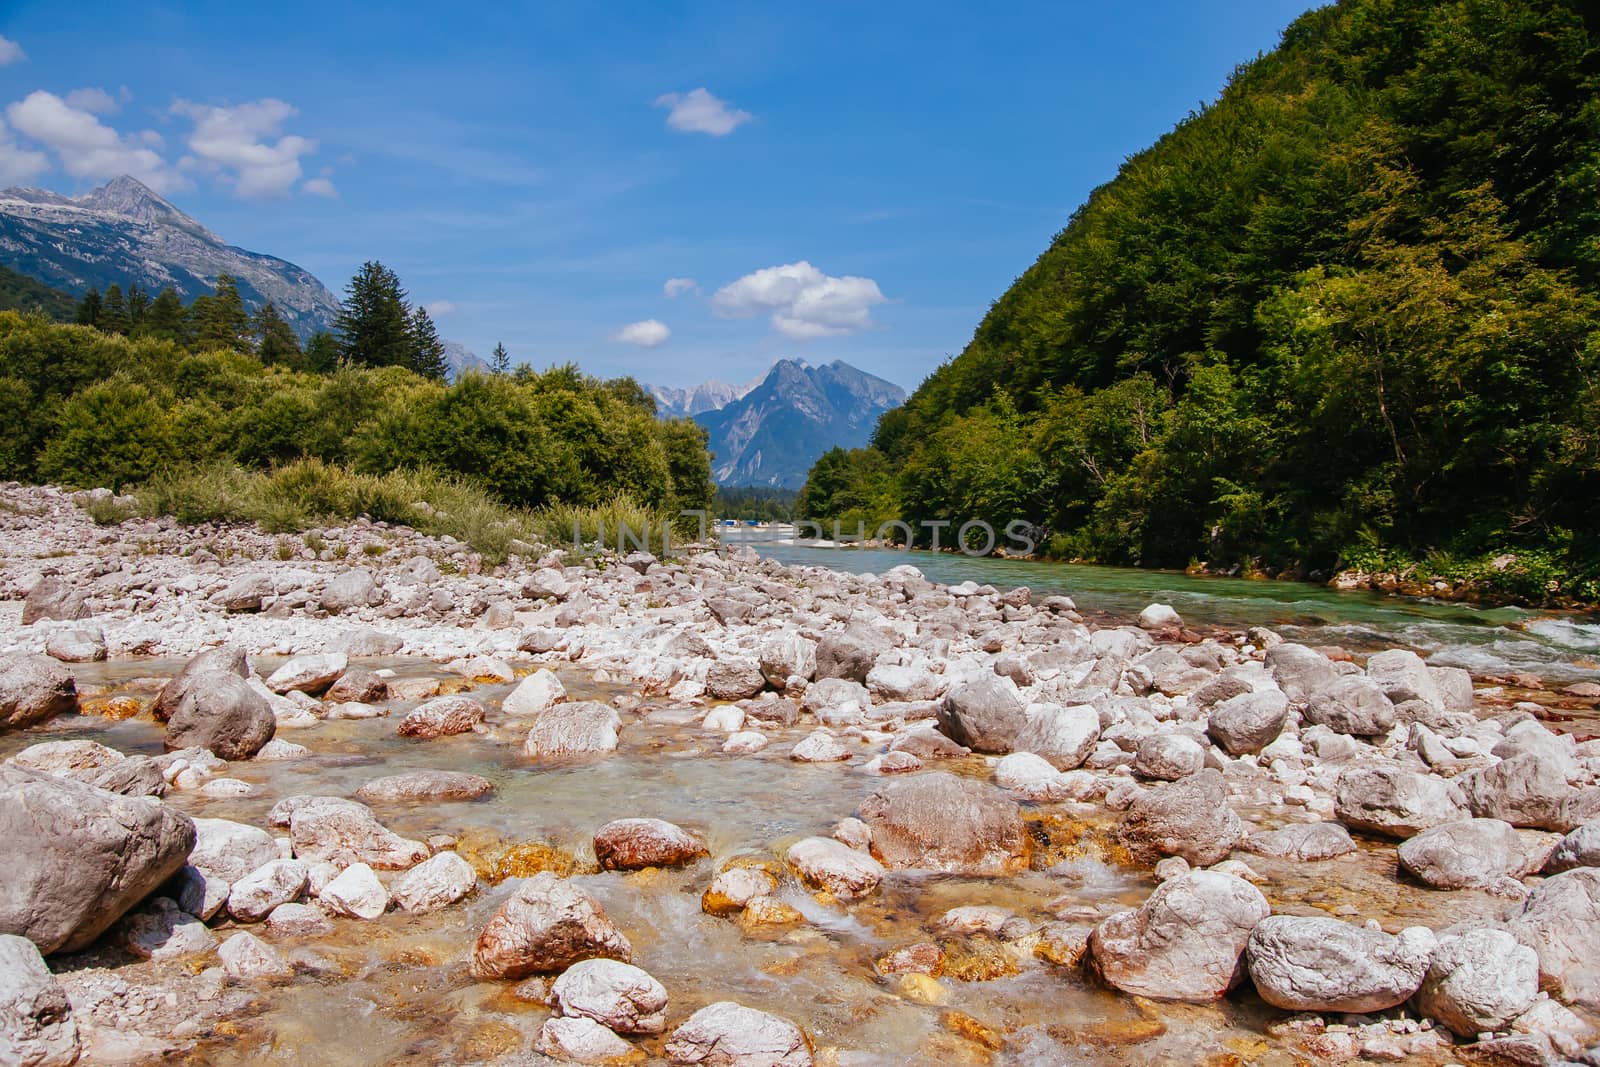 Scenic Landscape near the Vrsic Pass in Slovenia by FiledIMAGE